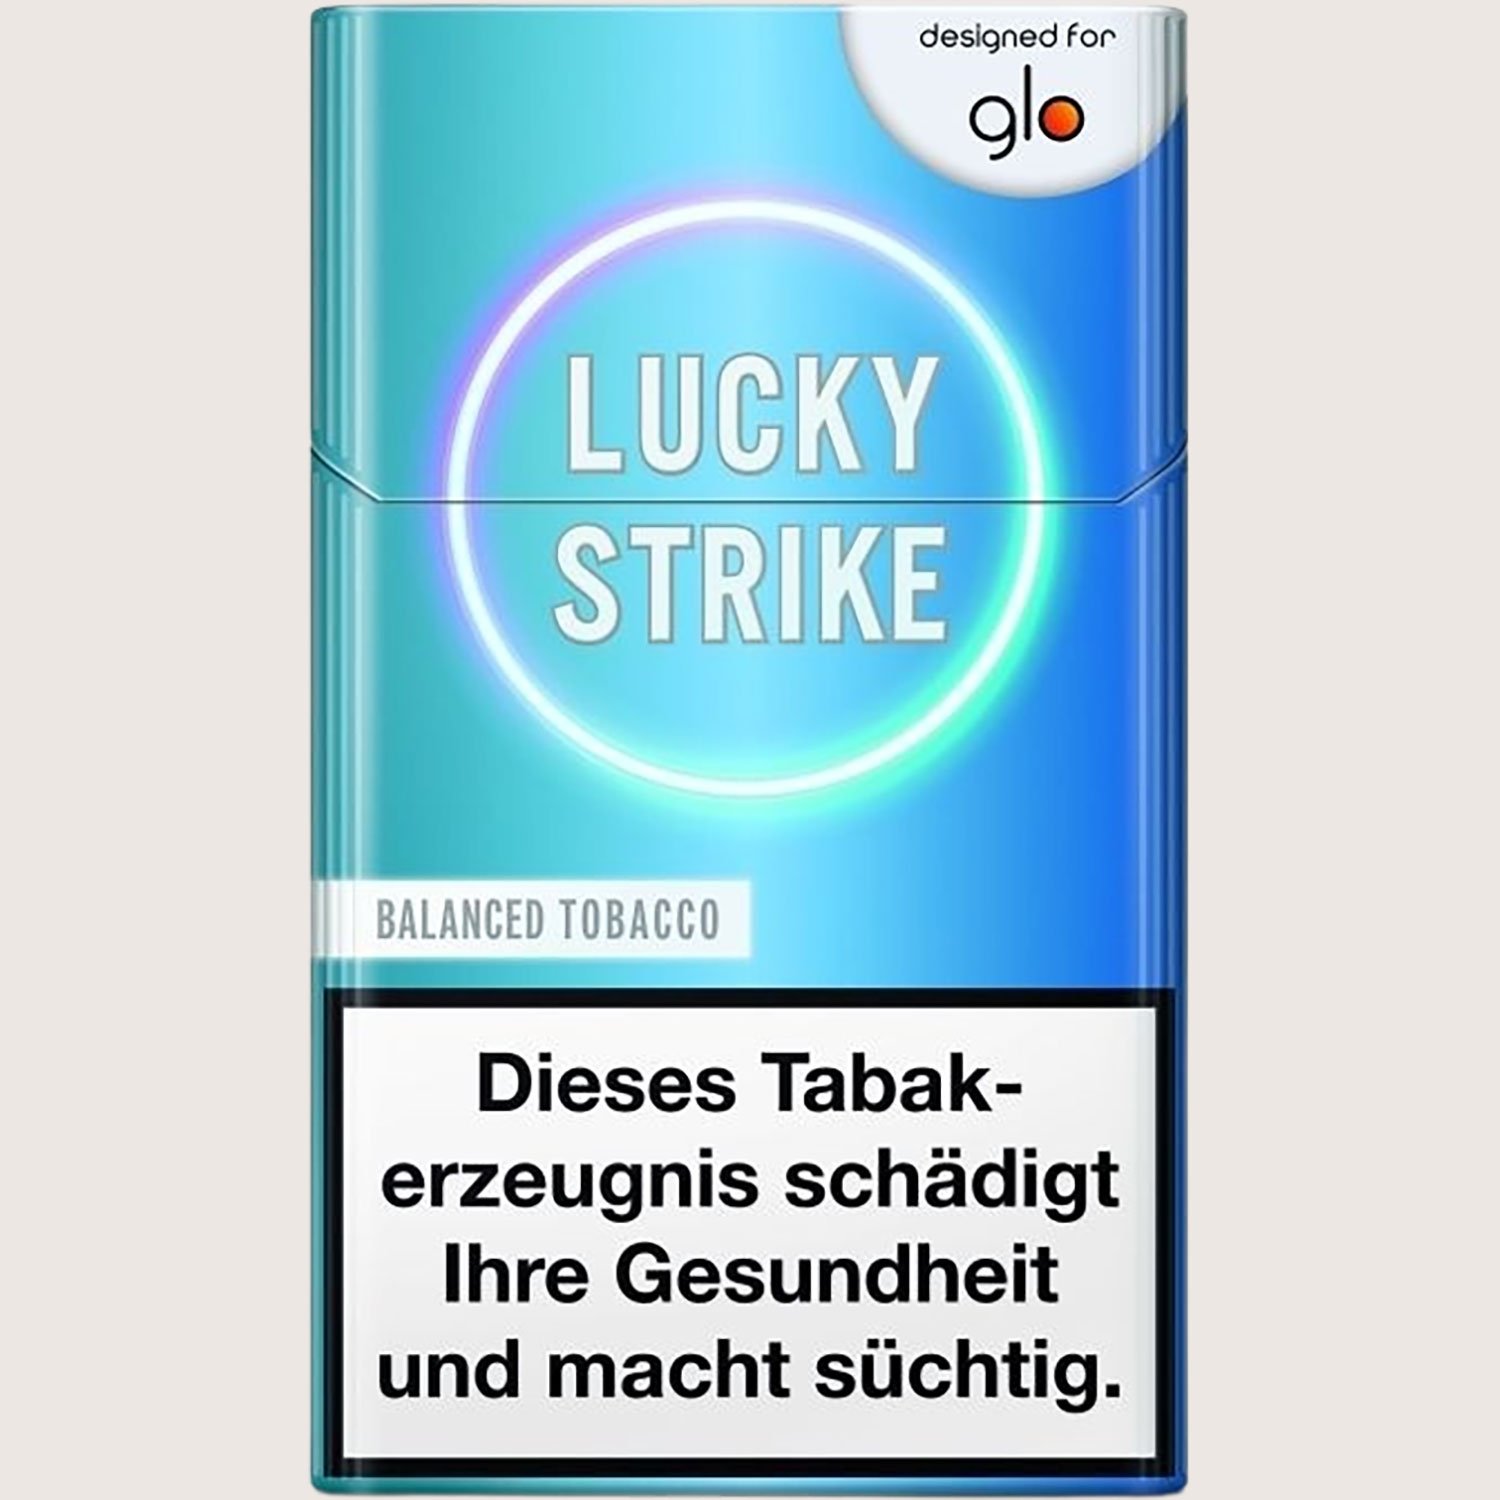 Lucky Strike for glo Balanced Tobacco